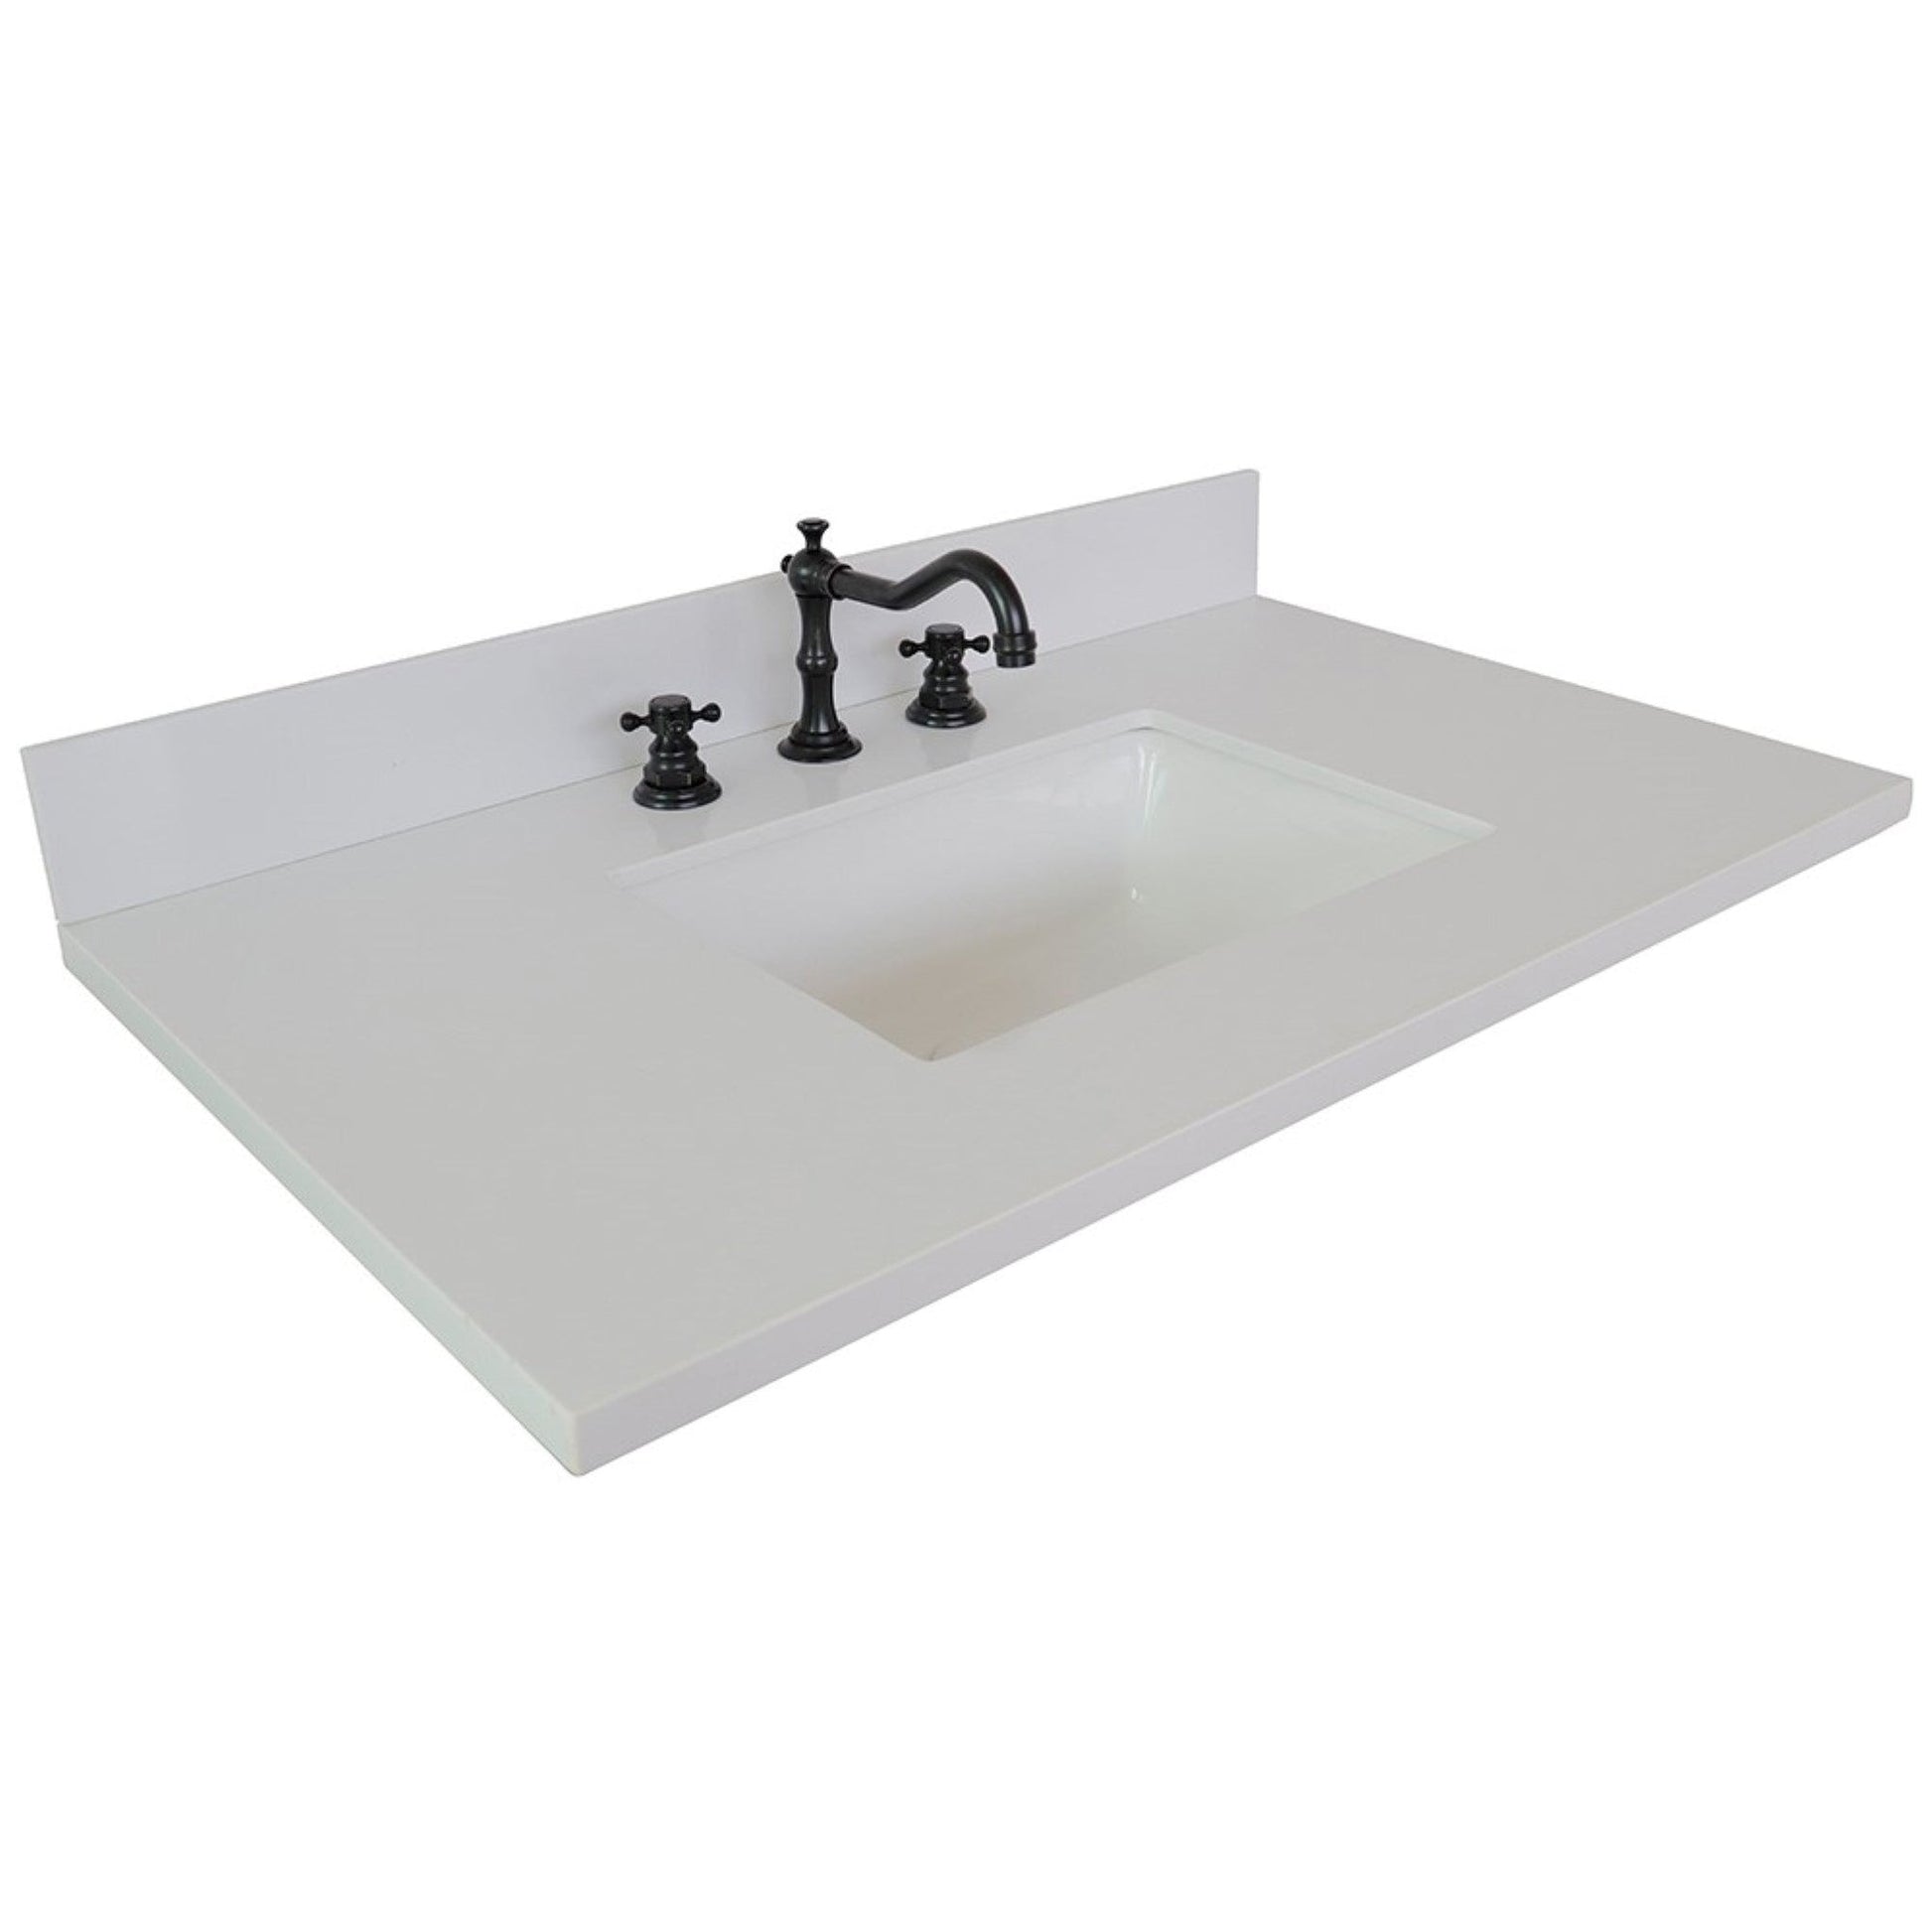 Bellaterra Home 37" x 22" White Quartz Three Hole Vanity Top With Undermount Rectangular Sink and Overflow